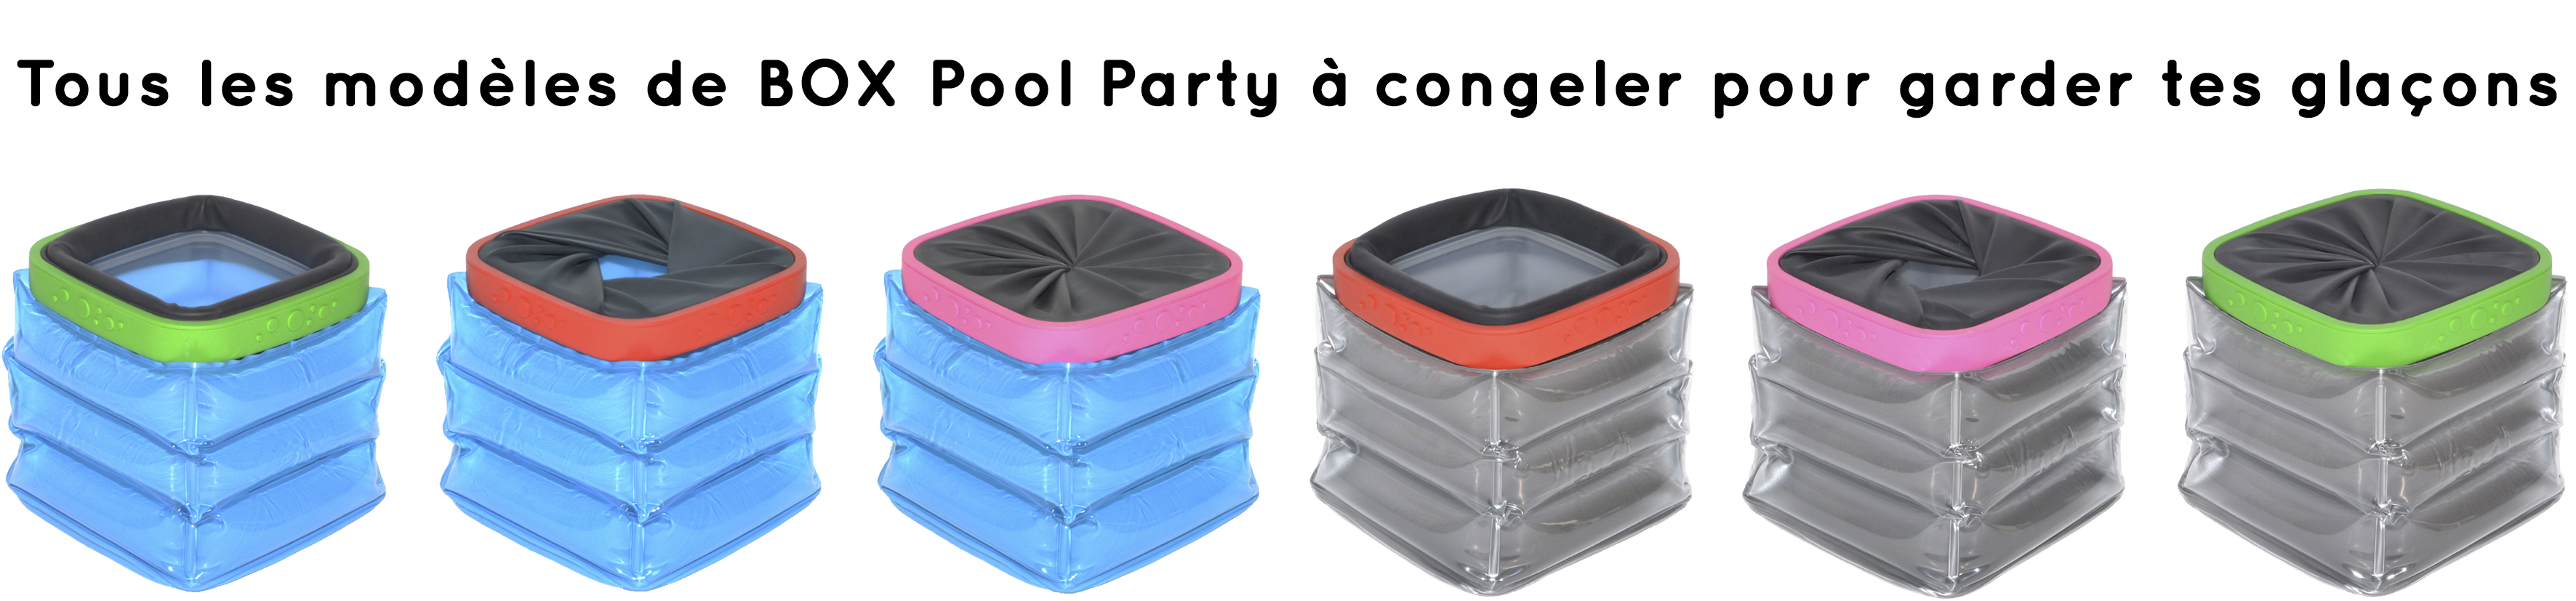 BOX pool party neolid modele pour glacon